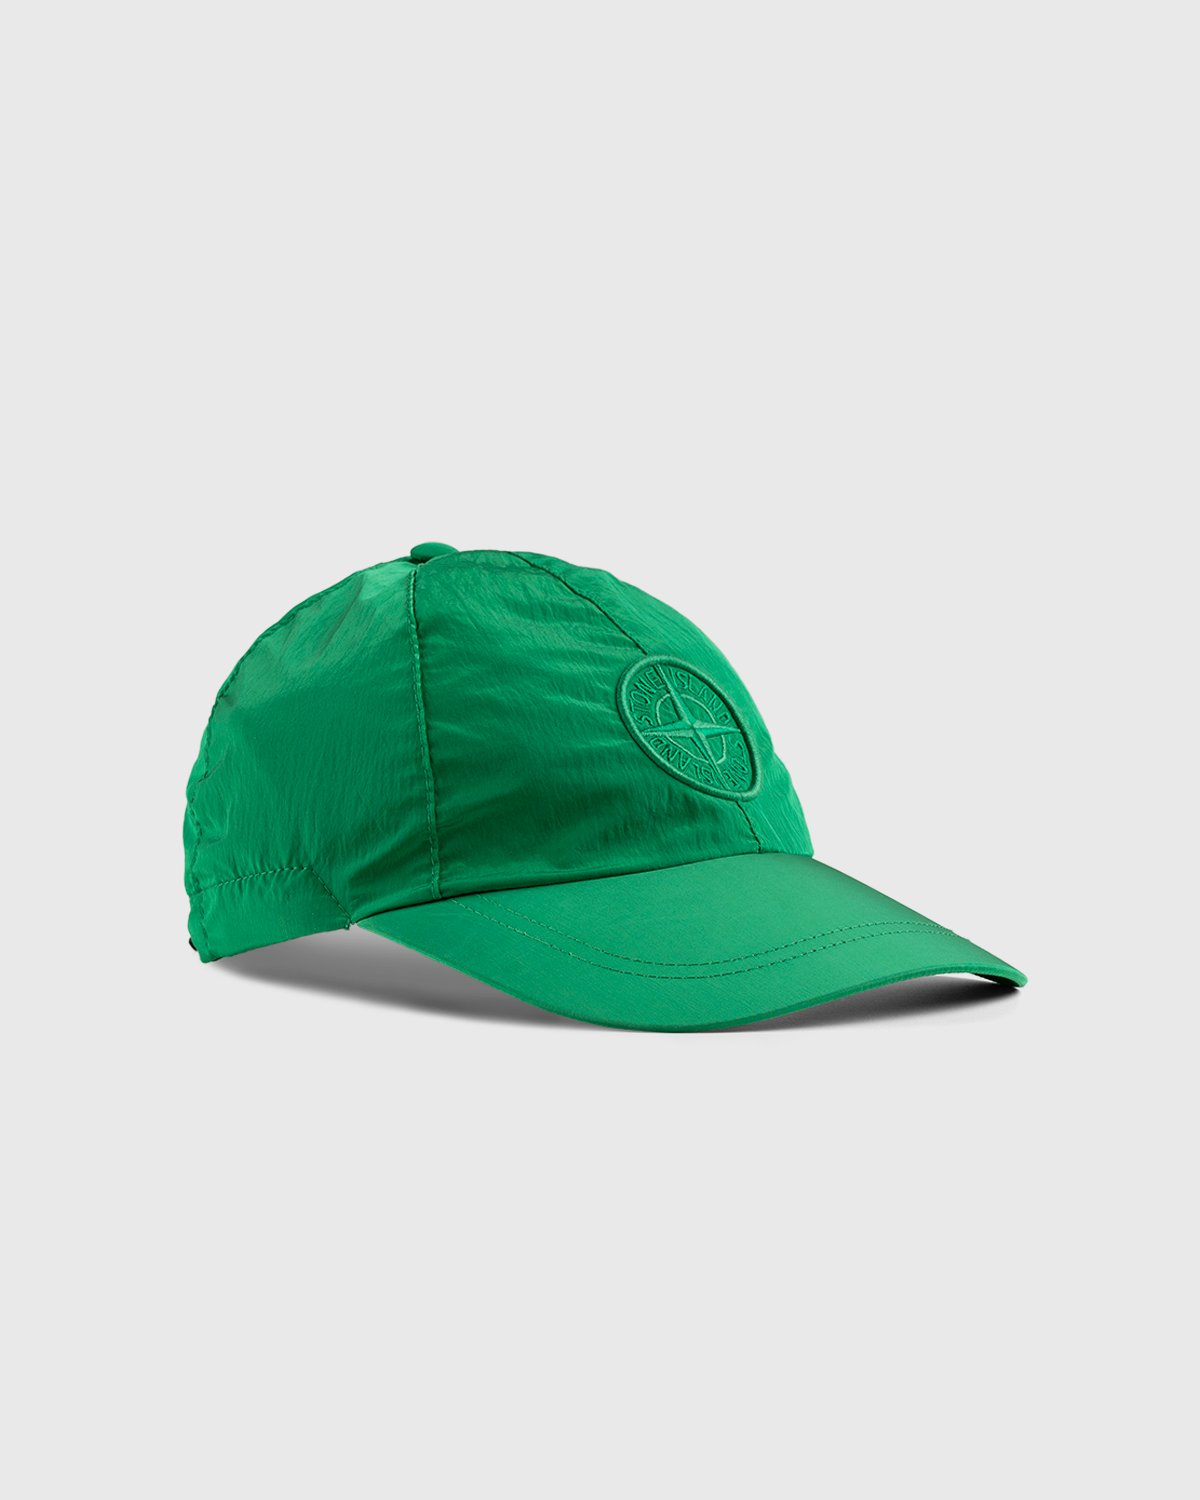 Stone Island - Six Panel Hat Green - Accessories - Green - Image 1